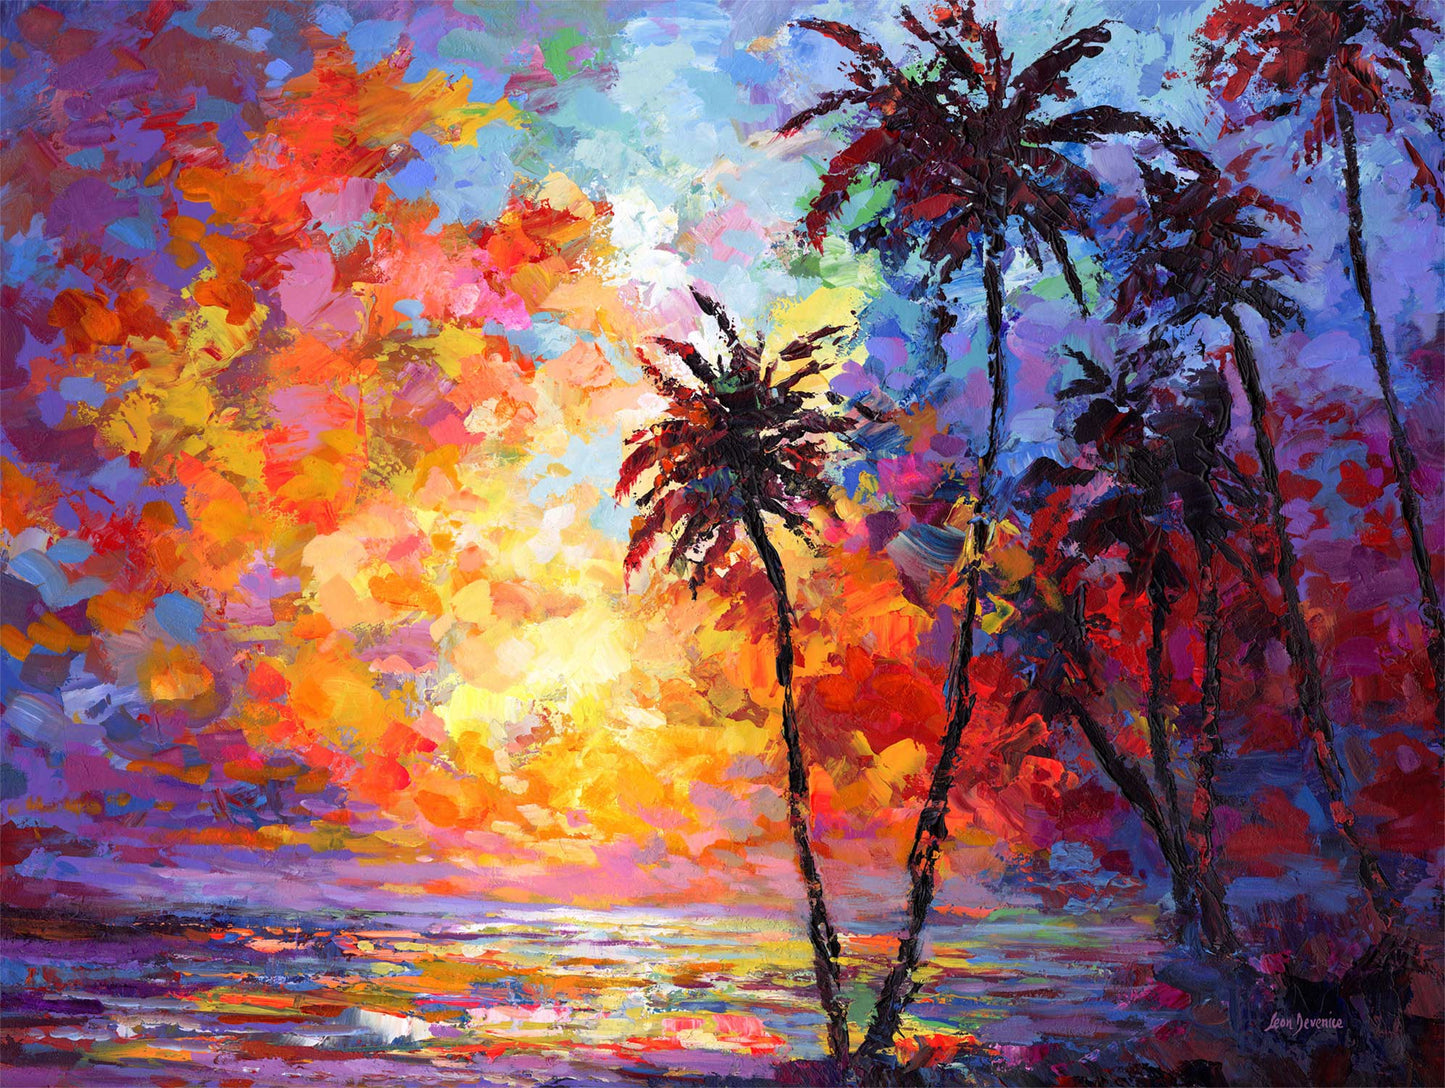 Sunset Beach painting 